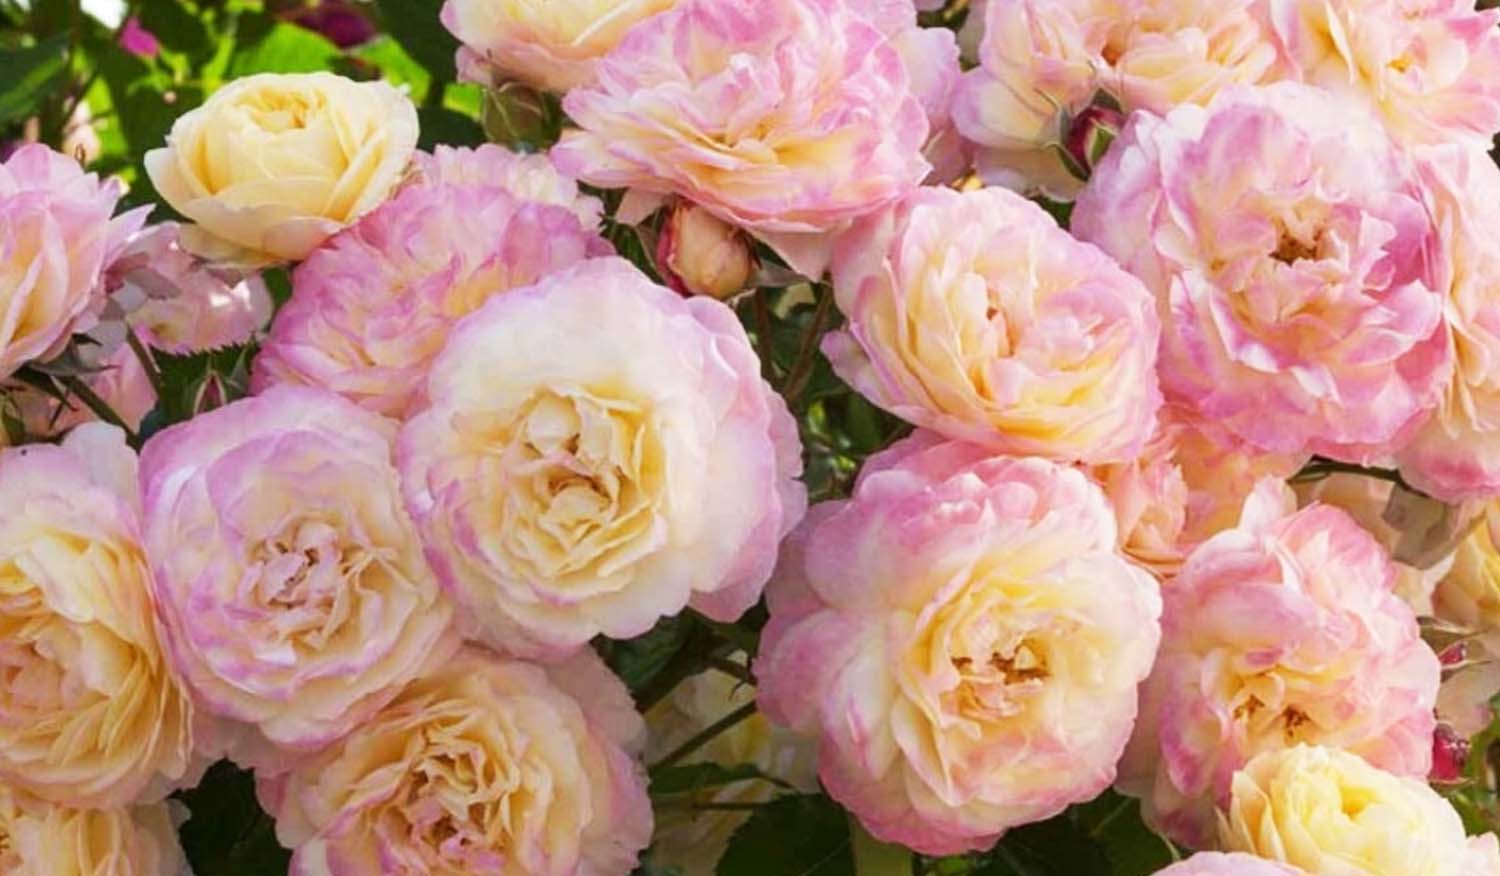 Uptown Girl Rose: A Gardeners' Delight